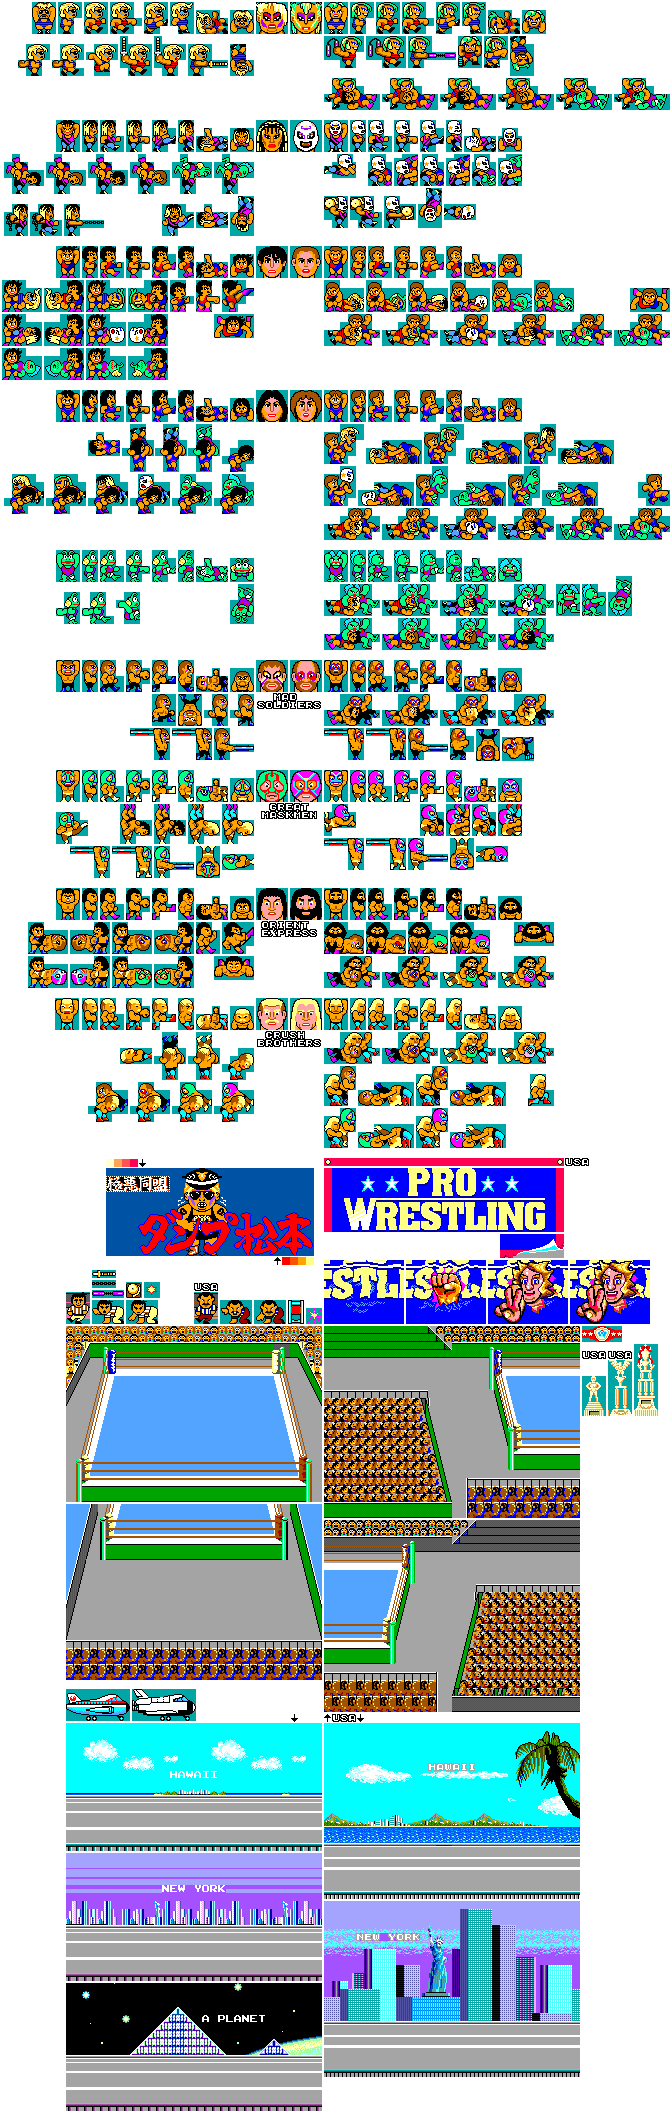 Wrestlers & Screens